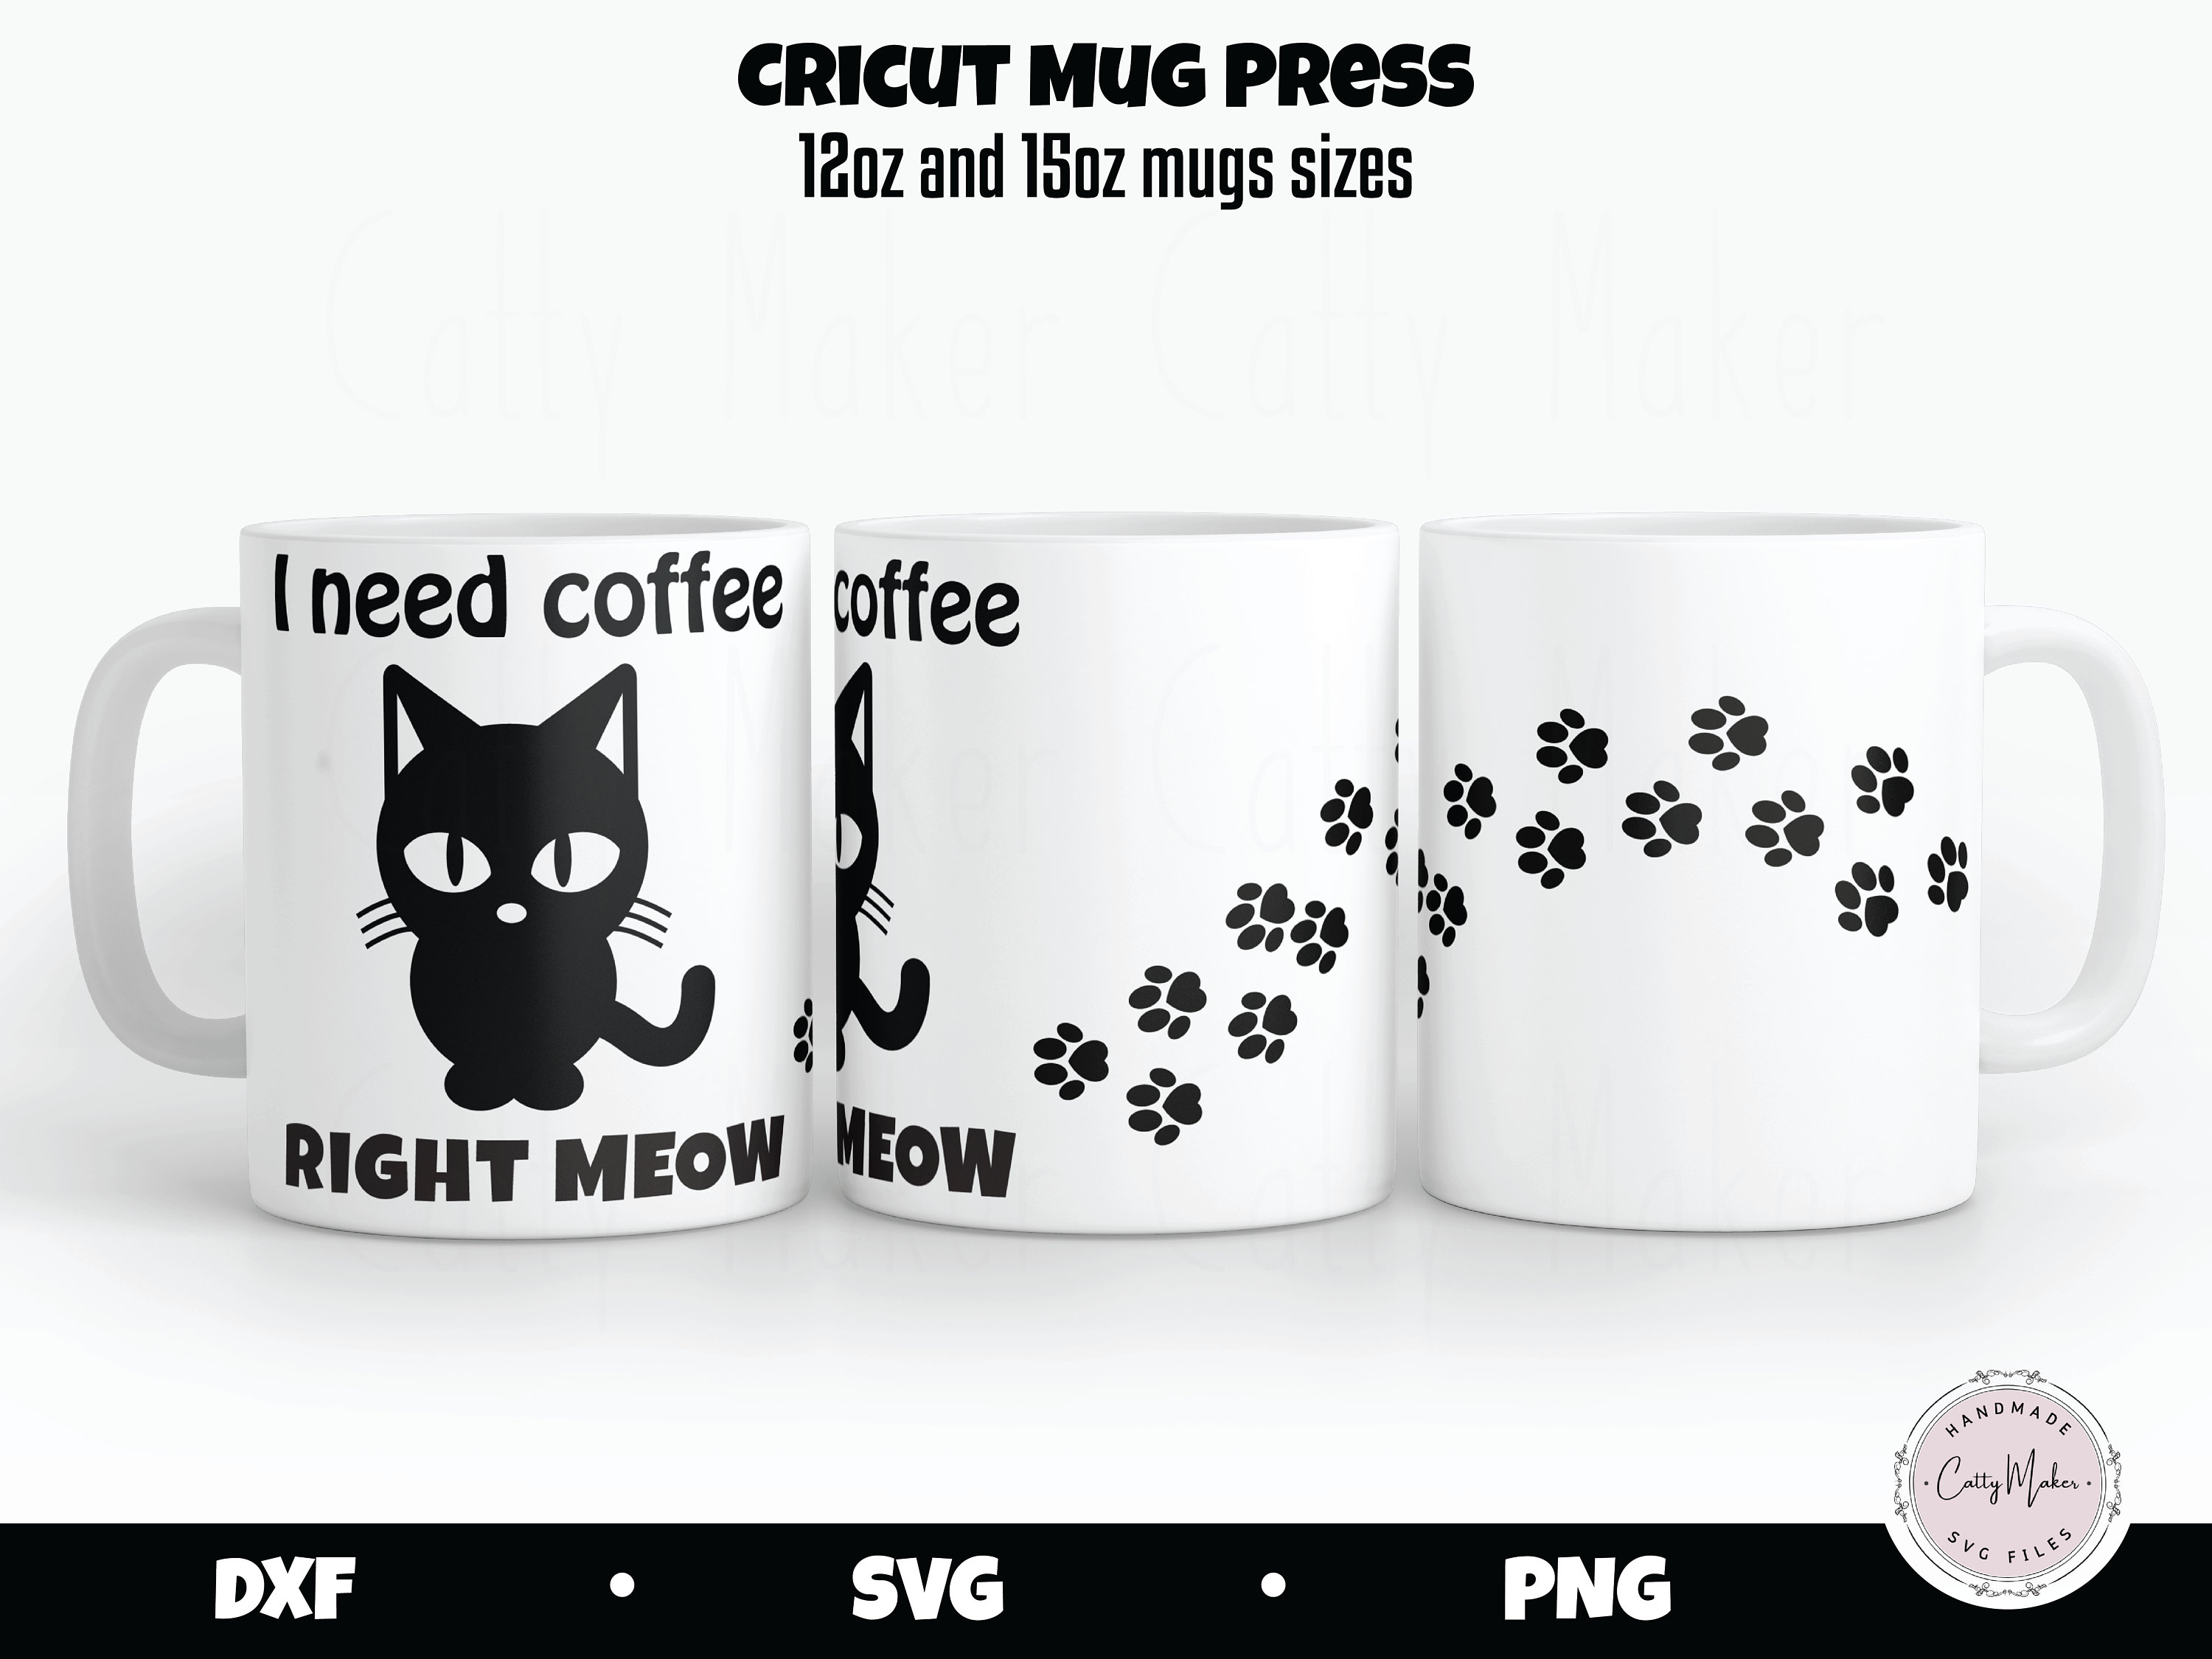 Cricut Mug Press SVG, Mug Wrap Template SVG, Honey Bee Pattern Svg, Mug  Press Template, Design for 12oz and 15oz Mug Sizes, Files for Cricut 